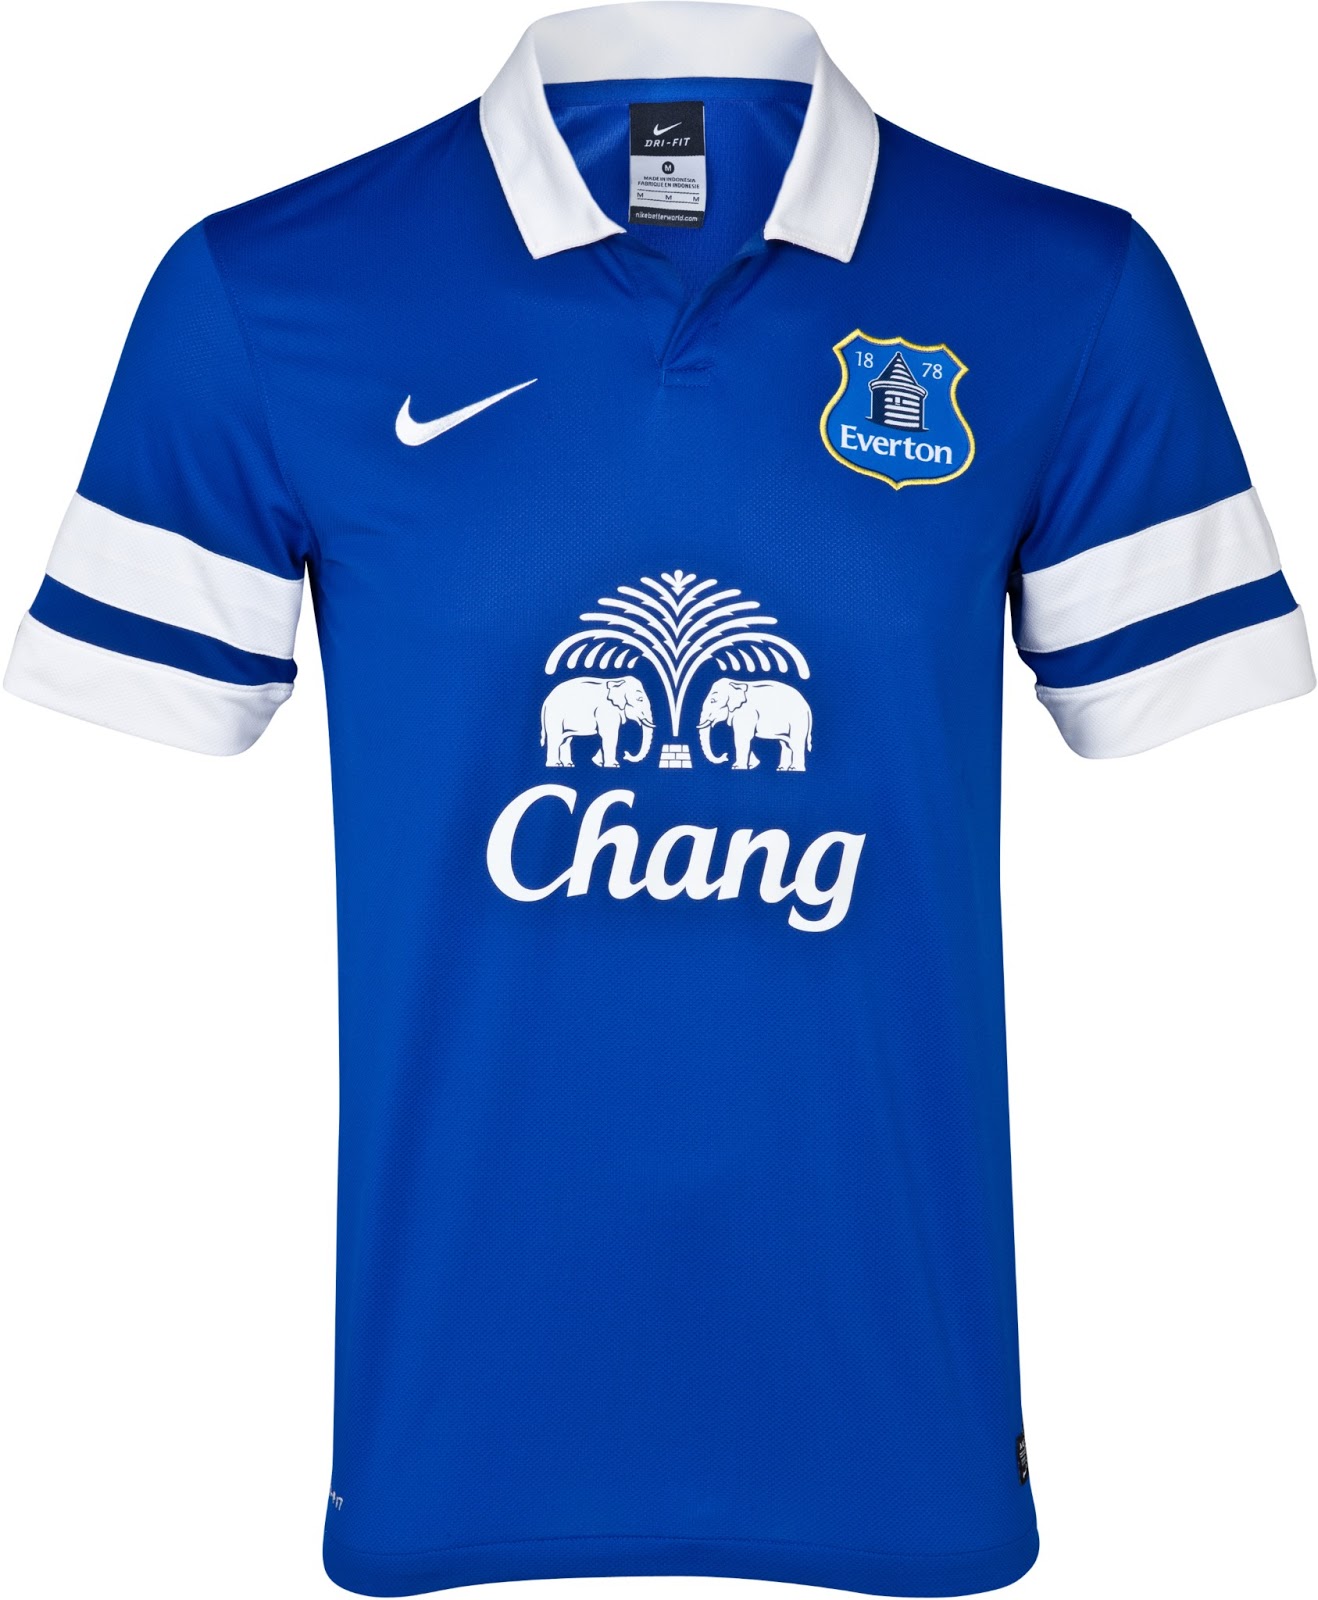 Patrocinar amanecer índice Everton 13-14 (2013-14) Home and Away Kits Released - Footy Headlines